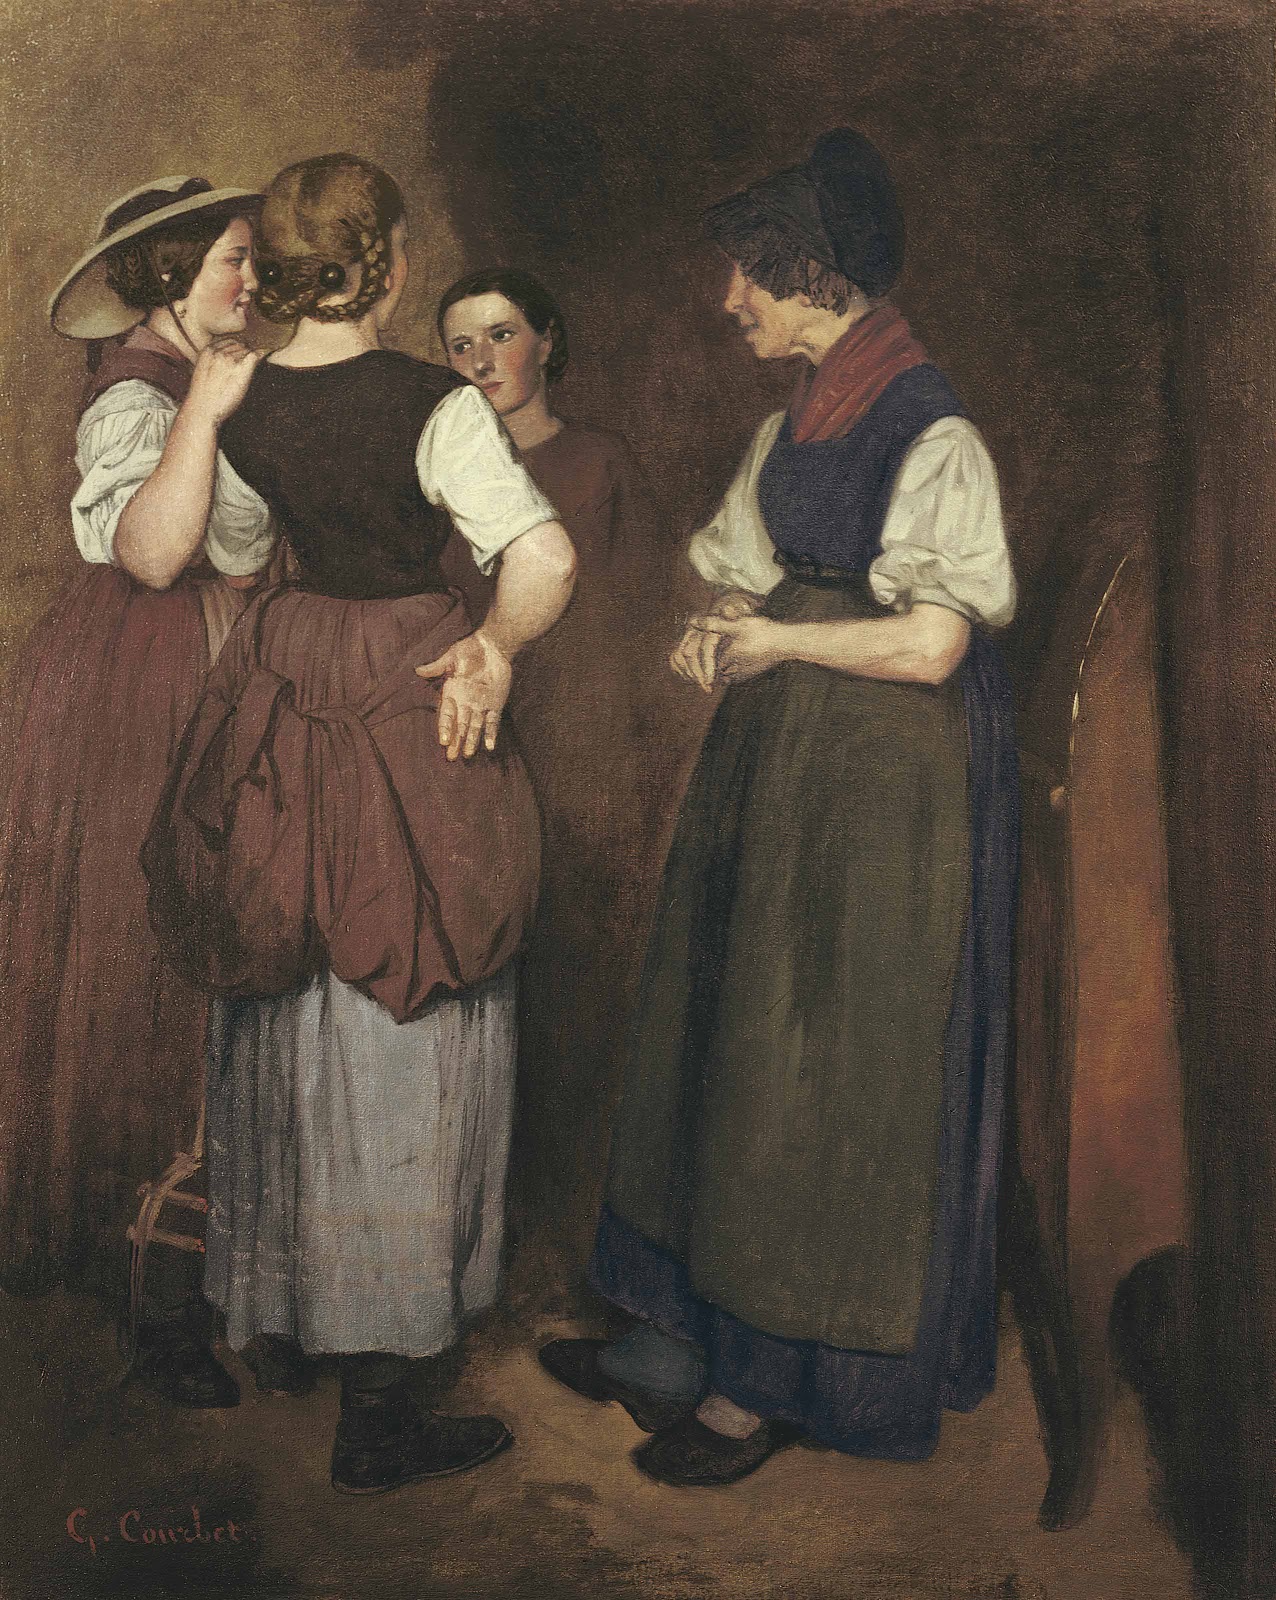 Gustave+Courbet-1819-1877 (88).jpg